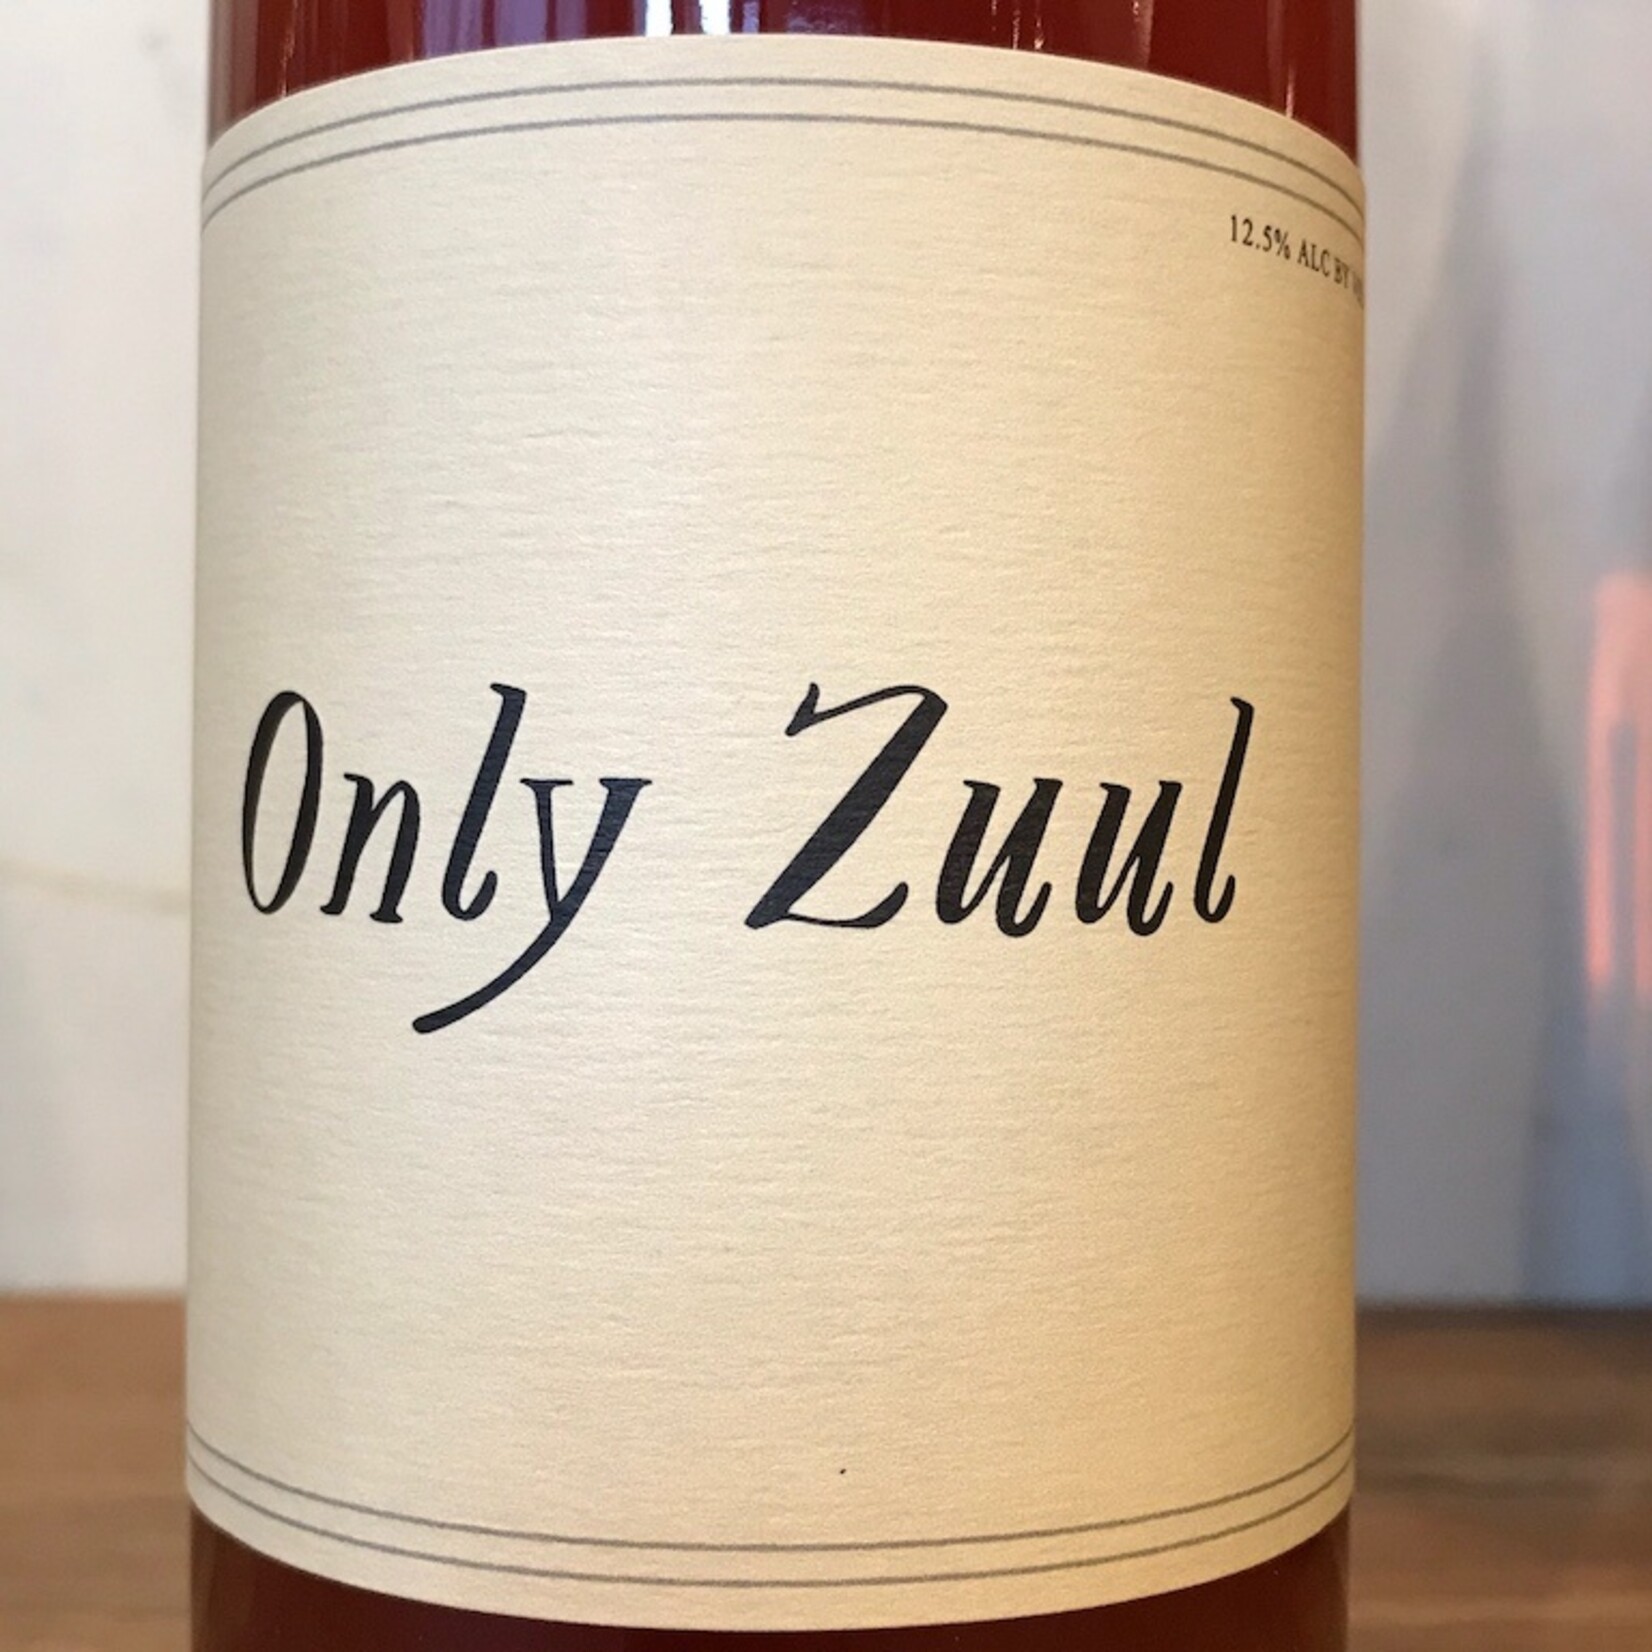 USA 2020 Swick “Only Zuul”